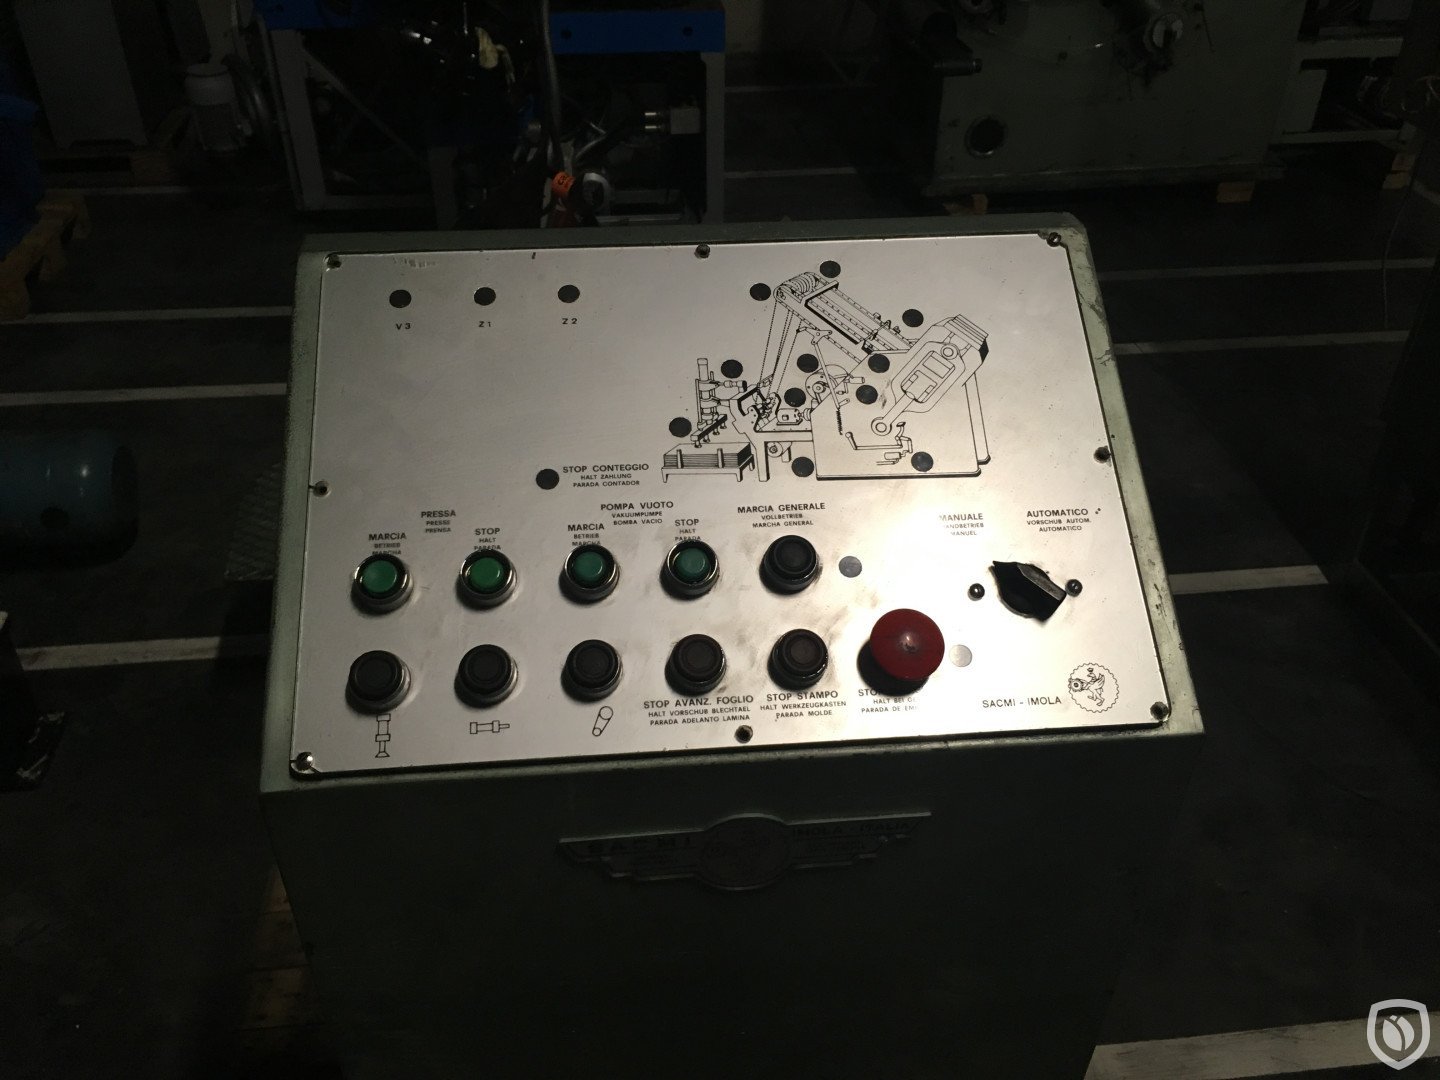 Sacmi press control panel